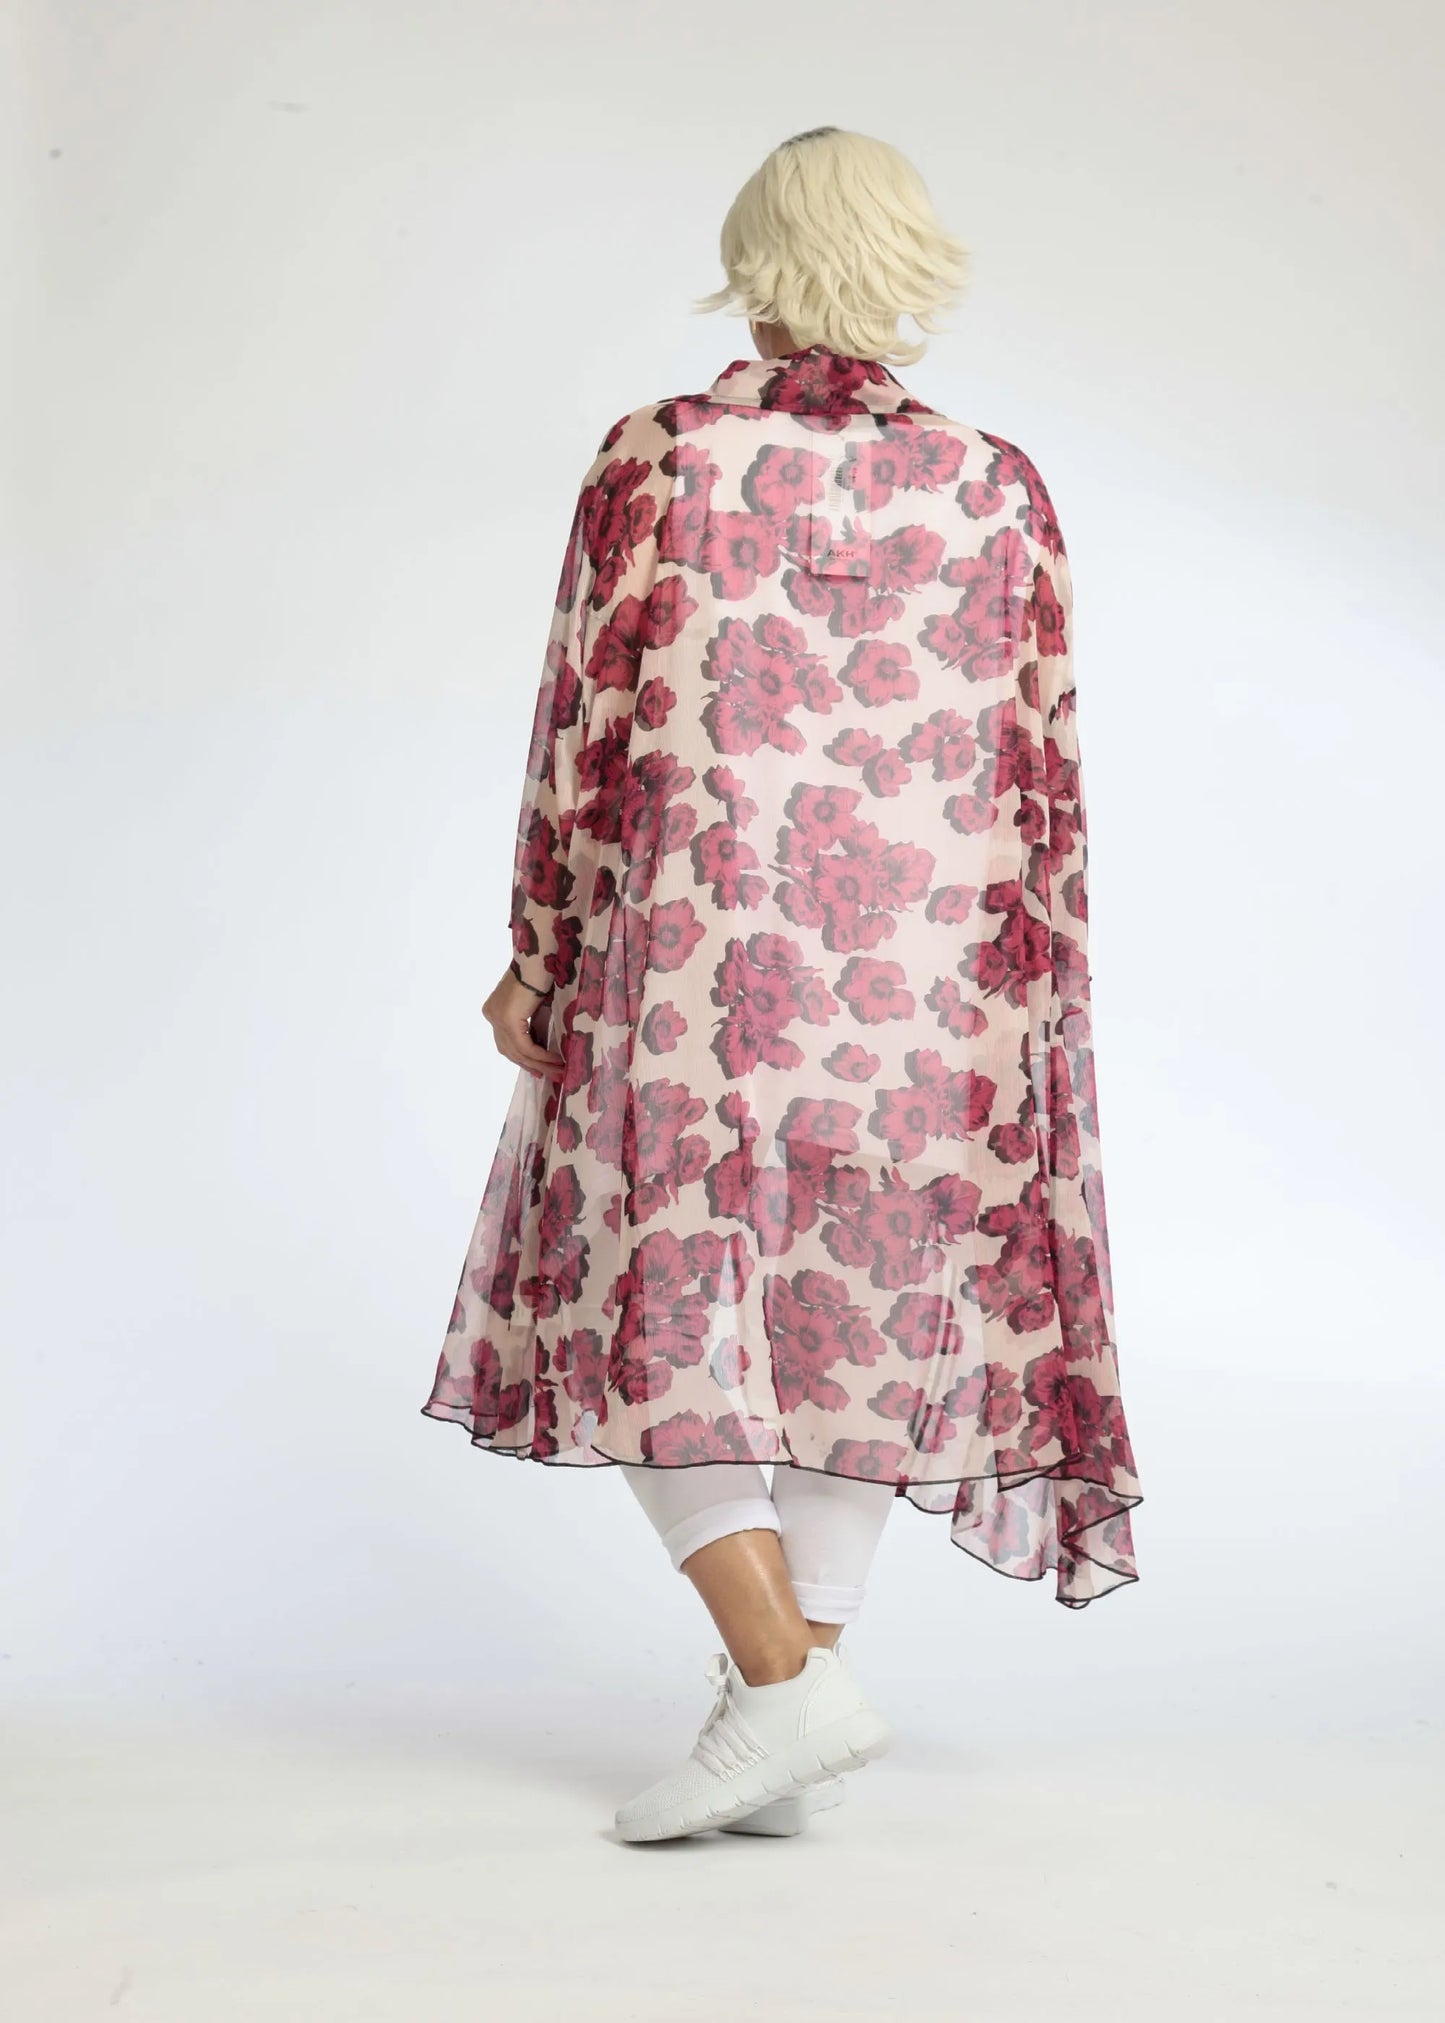 Sommer Bluse in A-Form aus luftiger Chiffon Qualität, Rania in Rose-Pink